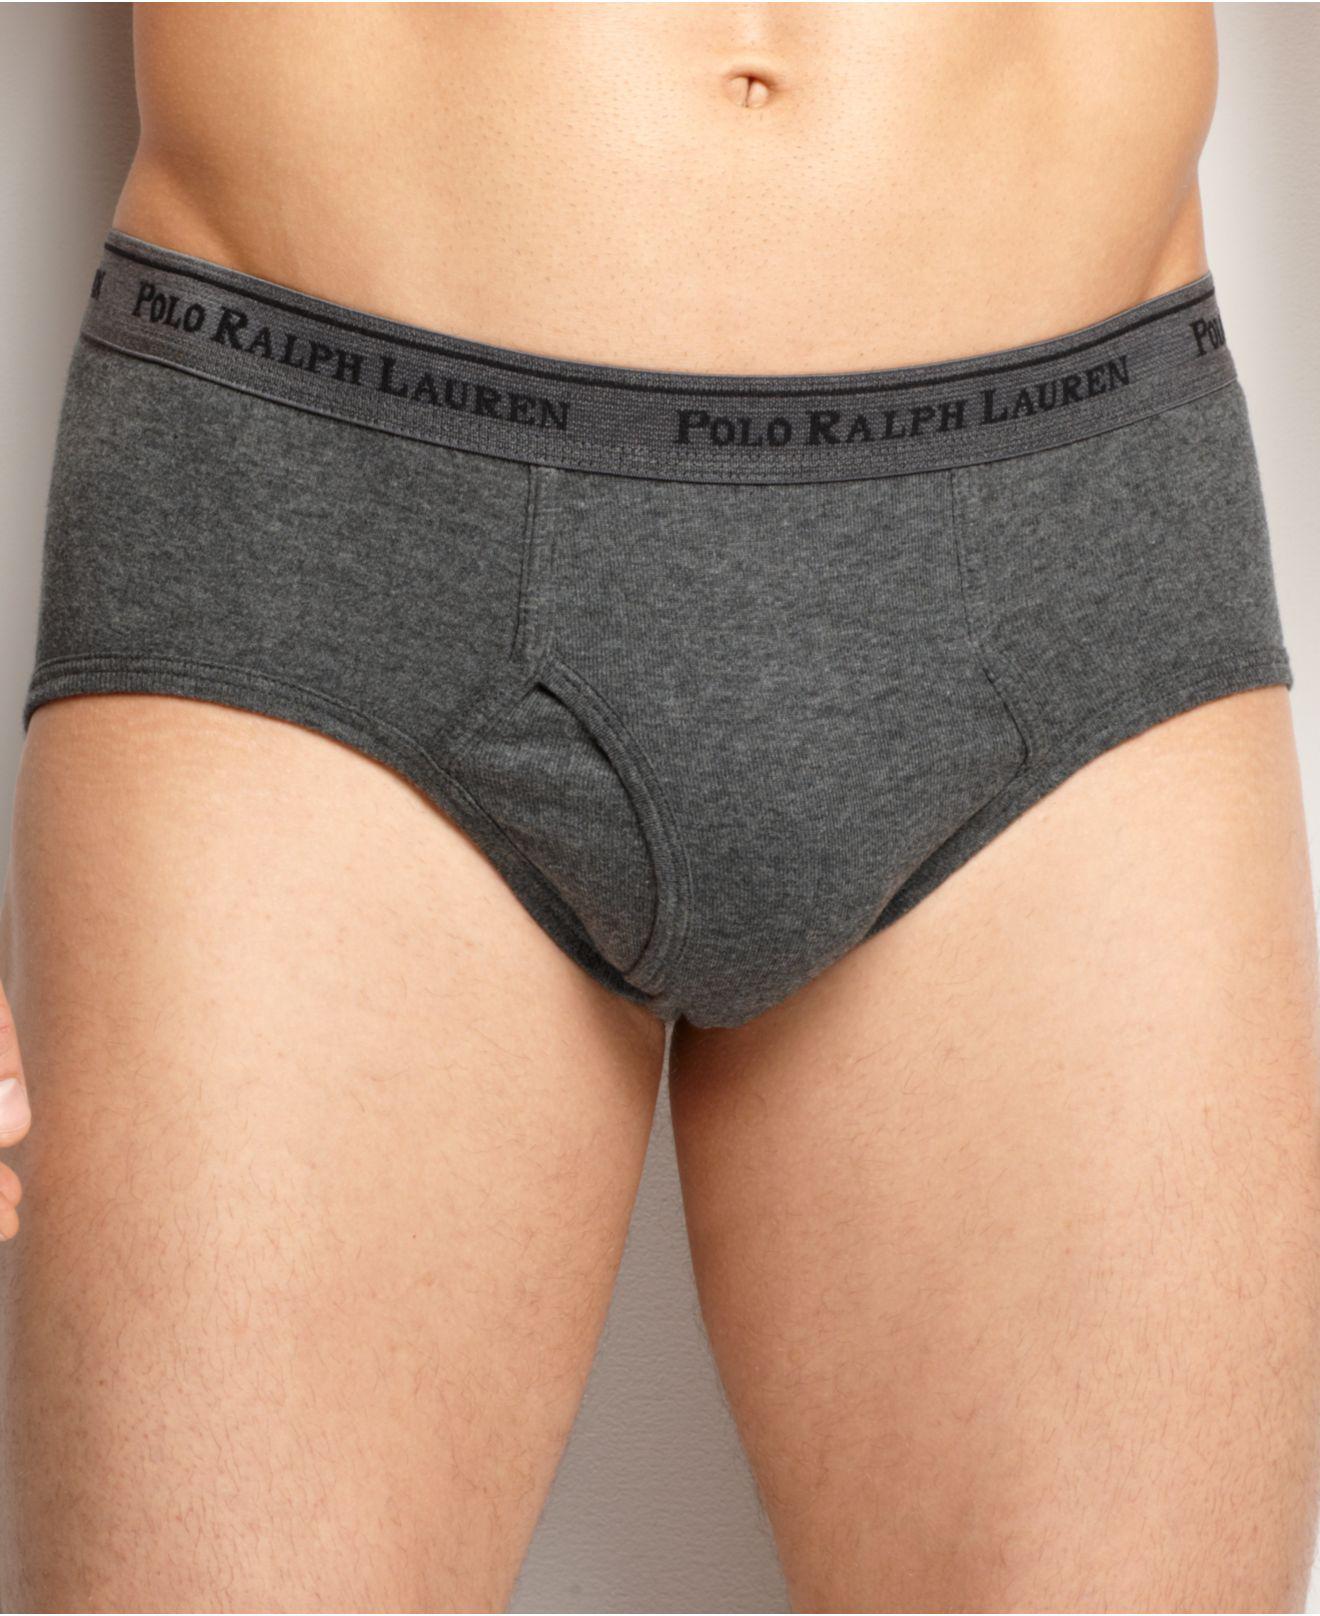 https://cdna.lystit.com/photos/macys/52c8ea54/polo-ralph-lauren--Underwear-Classic-Cotton-Low-Rise-Brief-4-Pack.jpeg